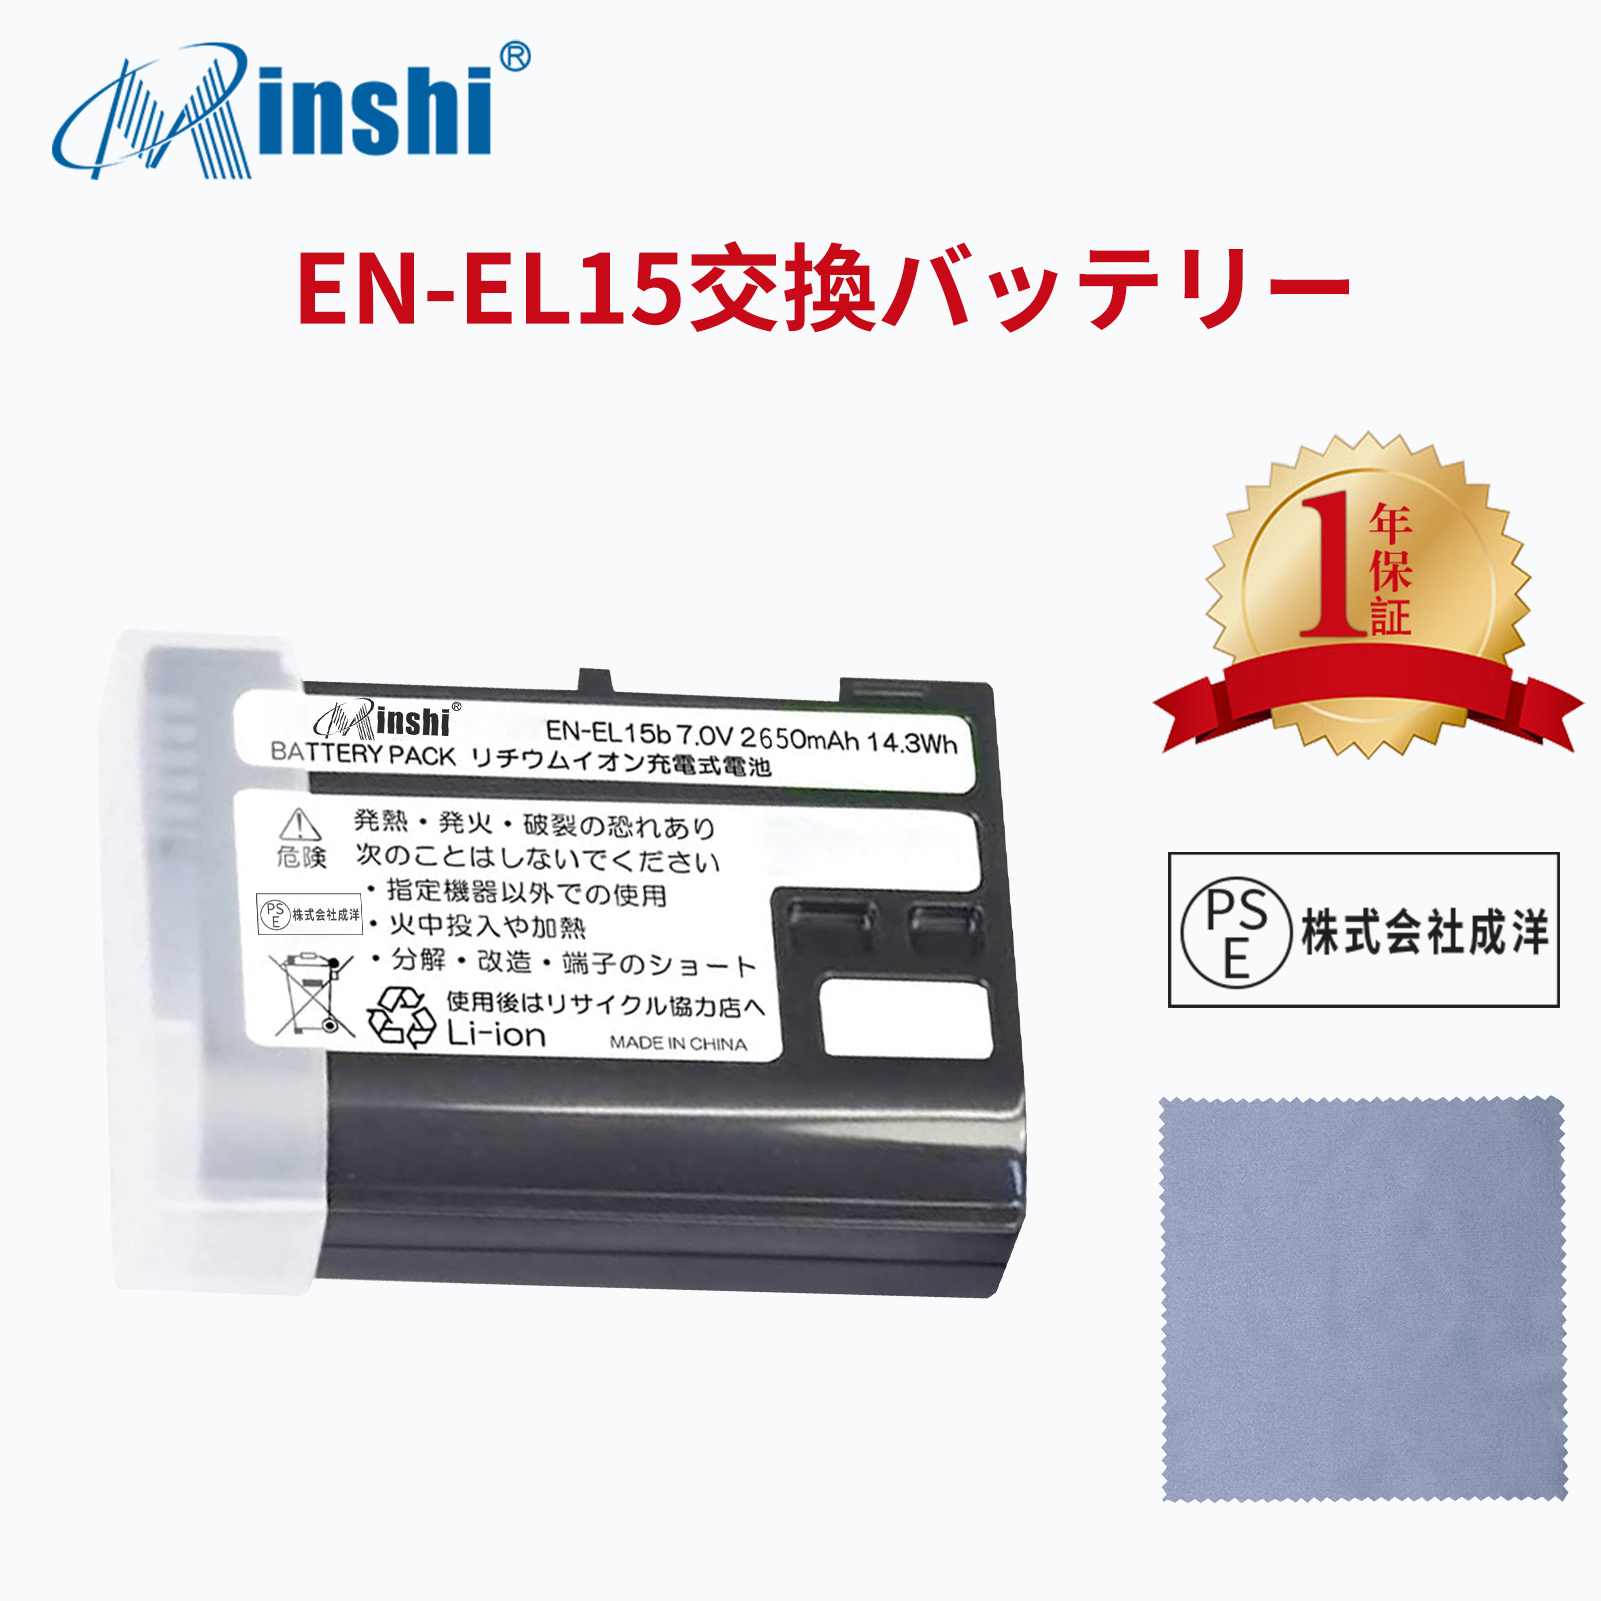 【清潔布ー付】minshi Nikon MB-N10 EN-EL15  【2650mAh 7.0V 】 Z6 Z7 D750 PSE認定済 高品質 EN-EL15C 交換用バッテリー